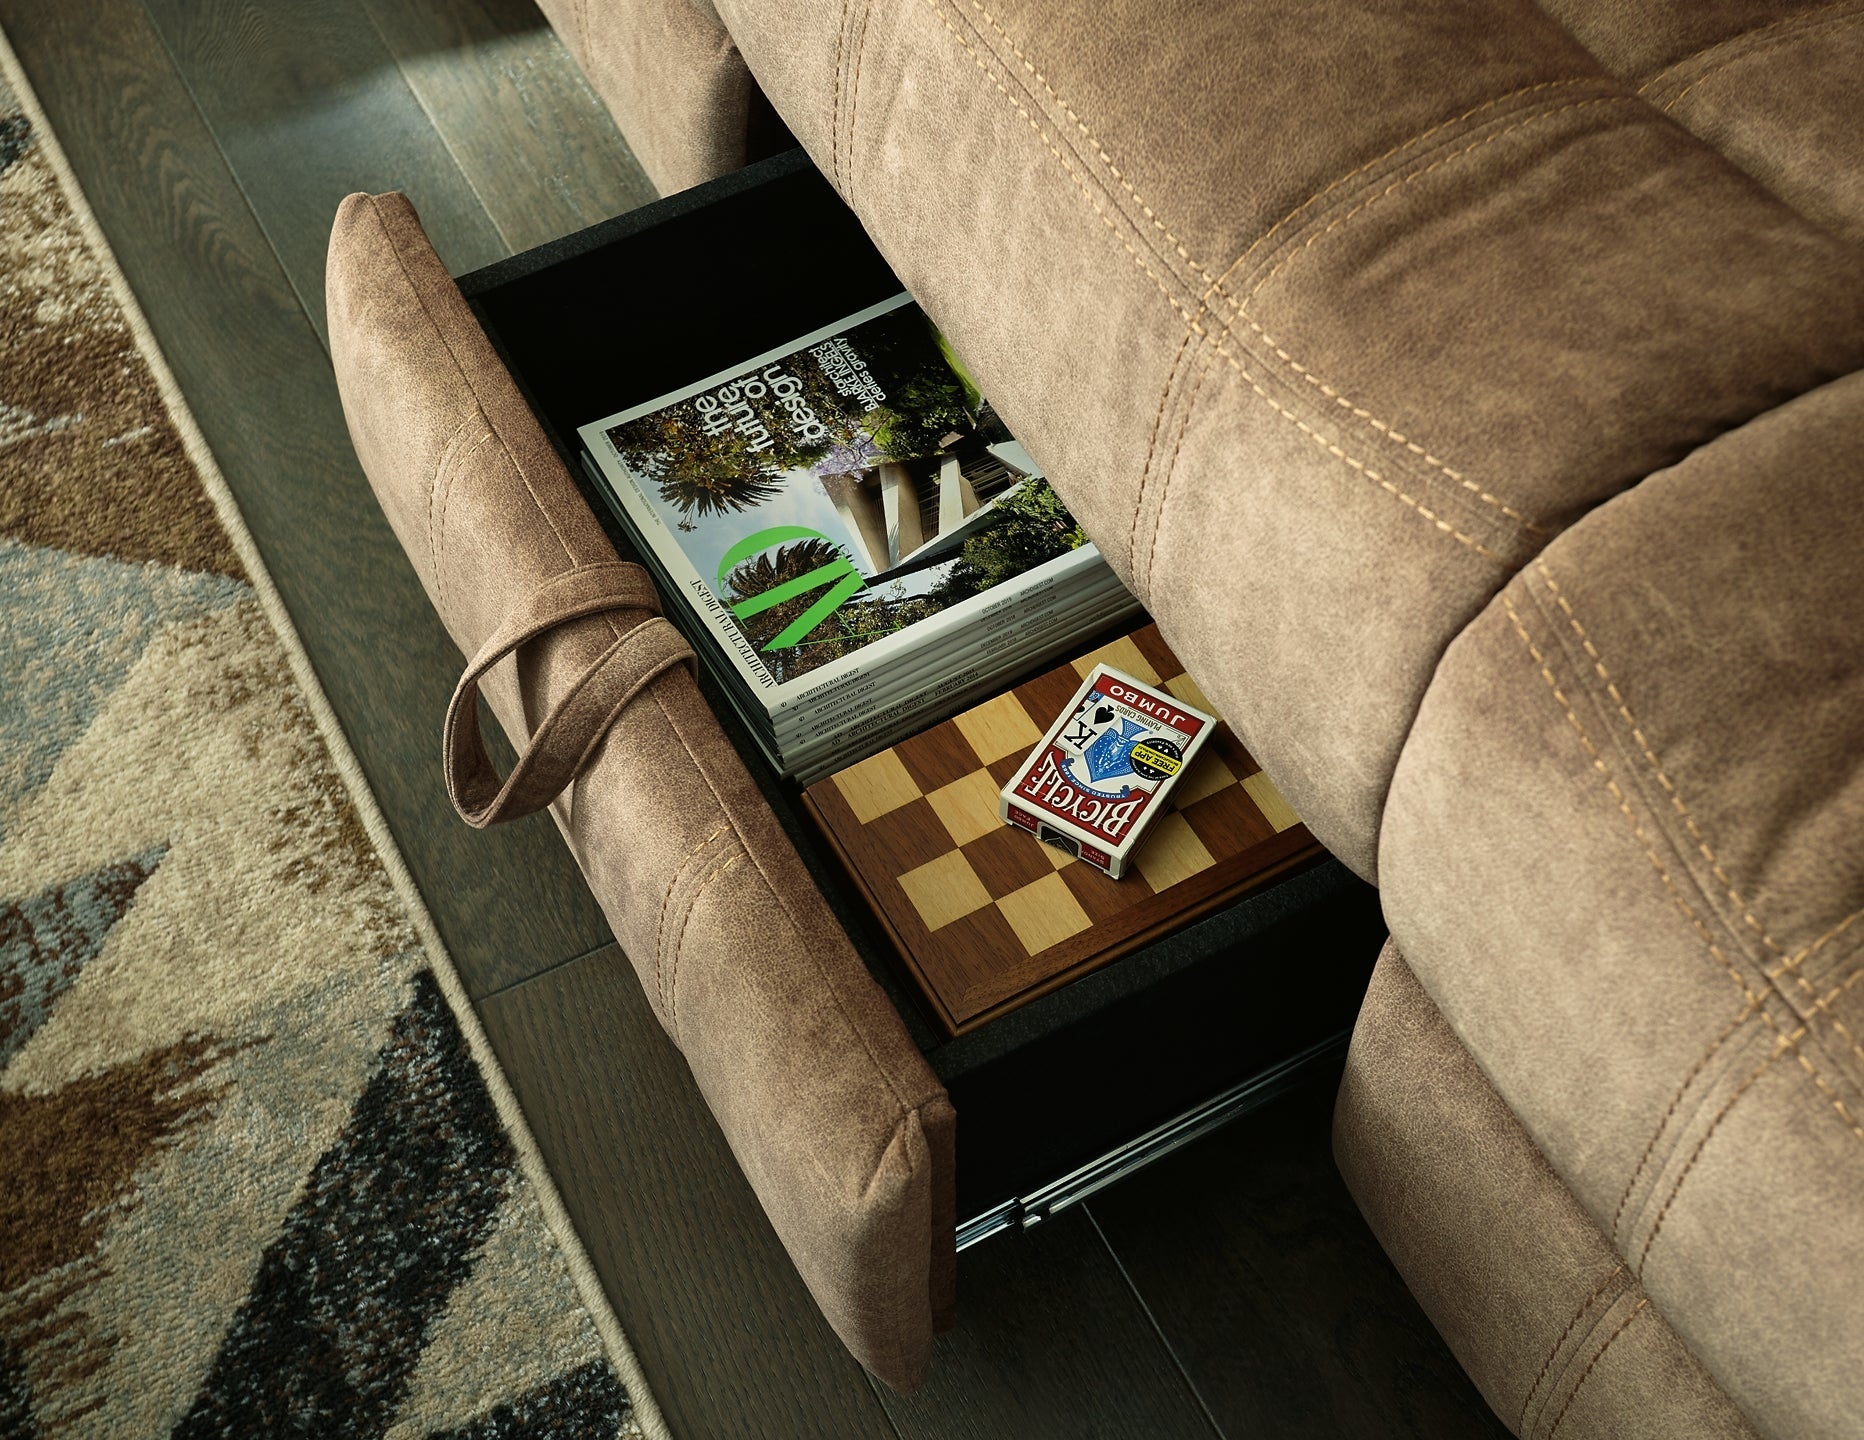 Huddle-Up Sofa, Loveseat and Recliner at Cloud 9 Mattress & Furniture furniture, home furnishing, home decor